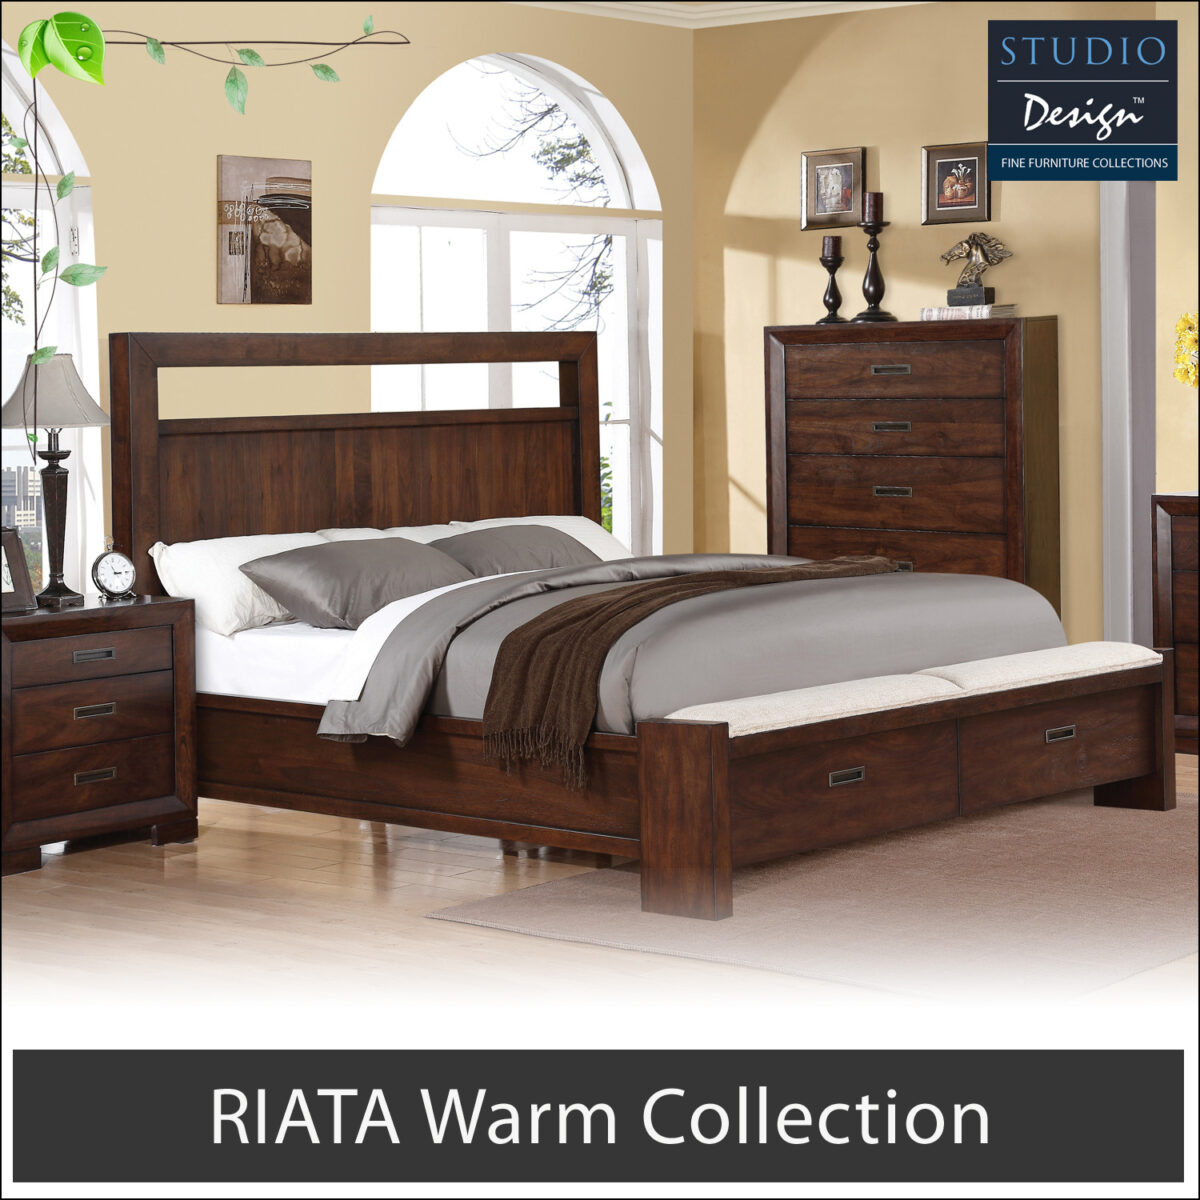 Riata Warm Collection